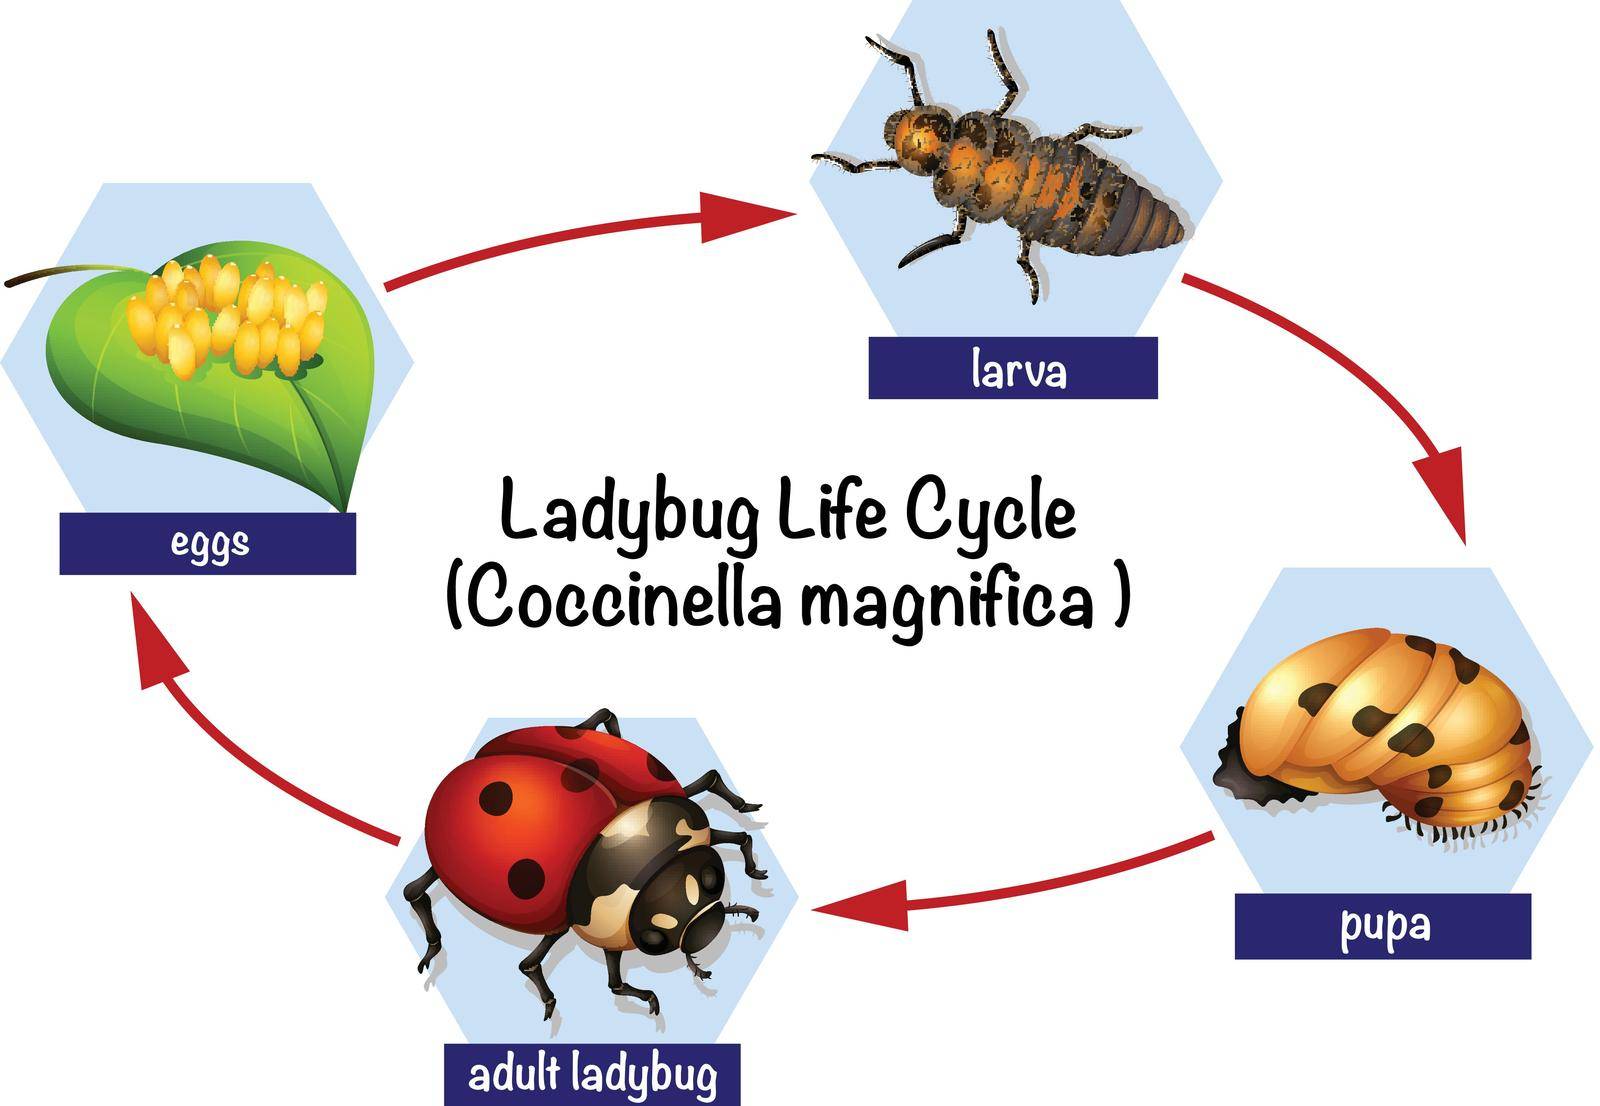 A ladybug life cycle illustration